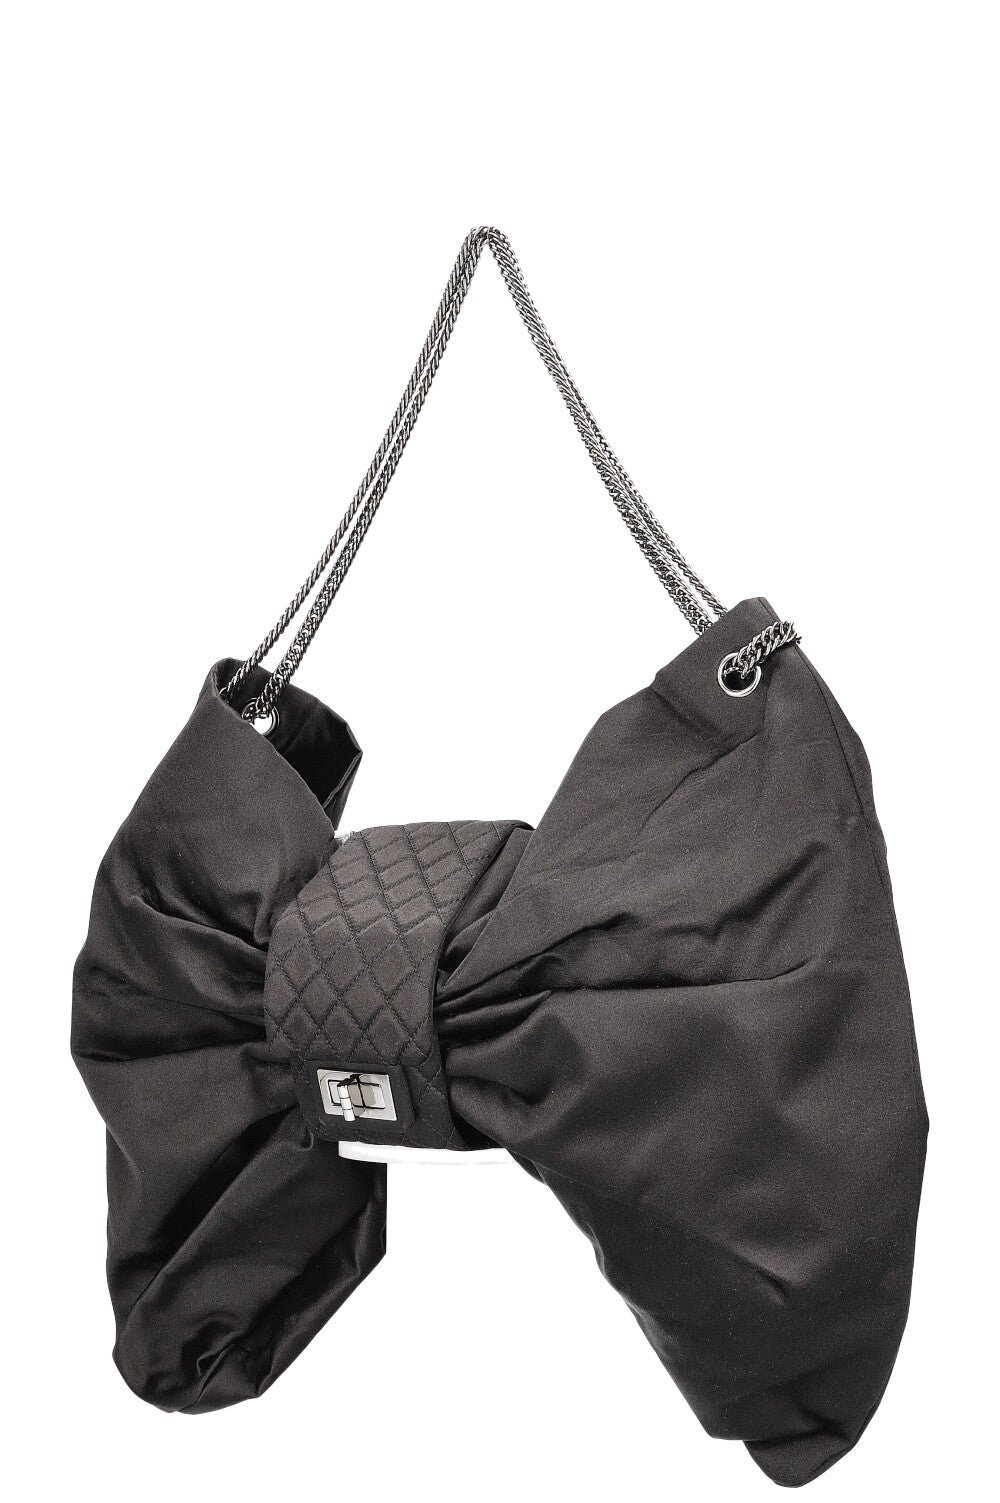 CHANEL Large Bow Bag Satin Black